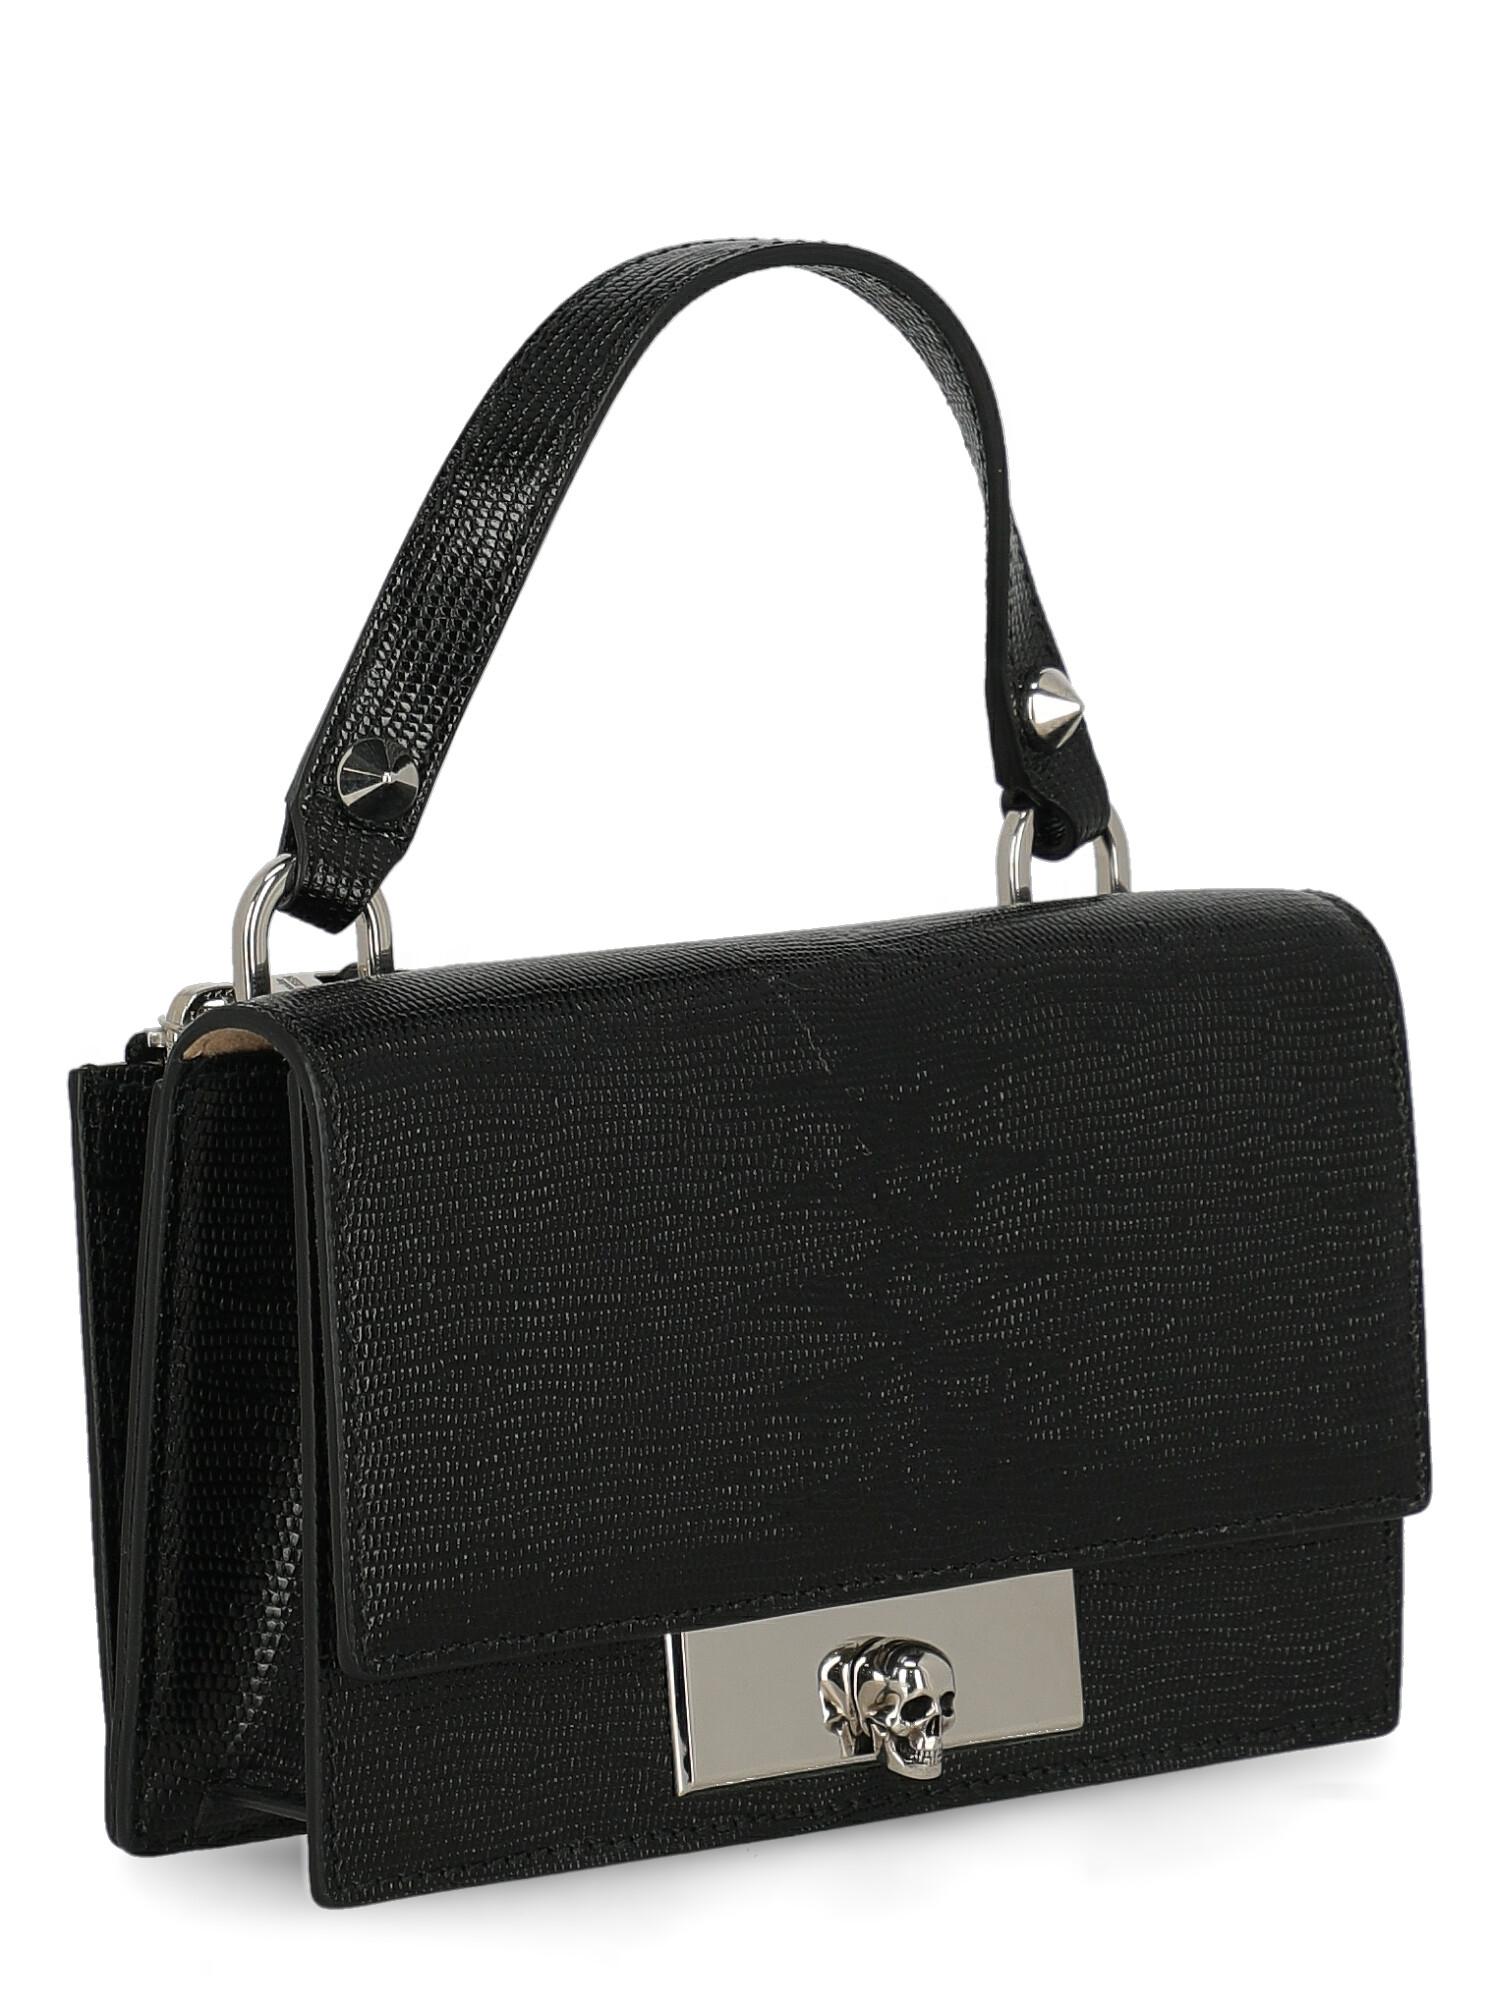 Alexander Mcqueen Woman Handbag Black Leather In Excellent Condition For Sale In Milan, IT